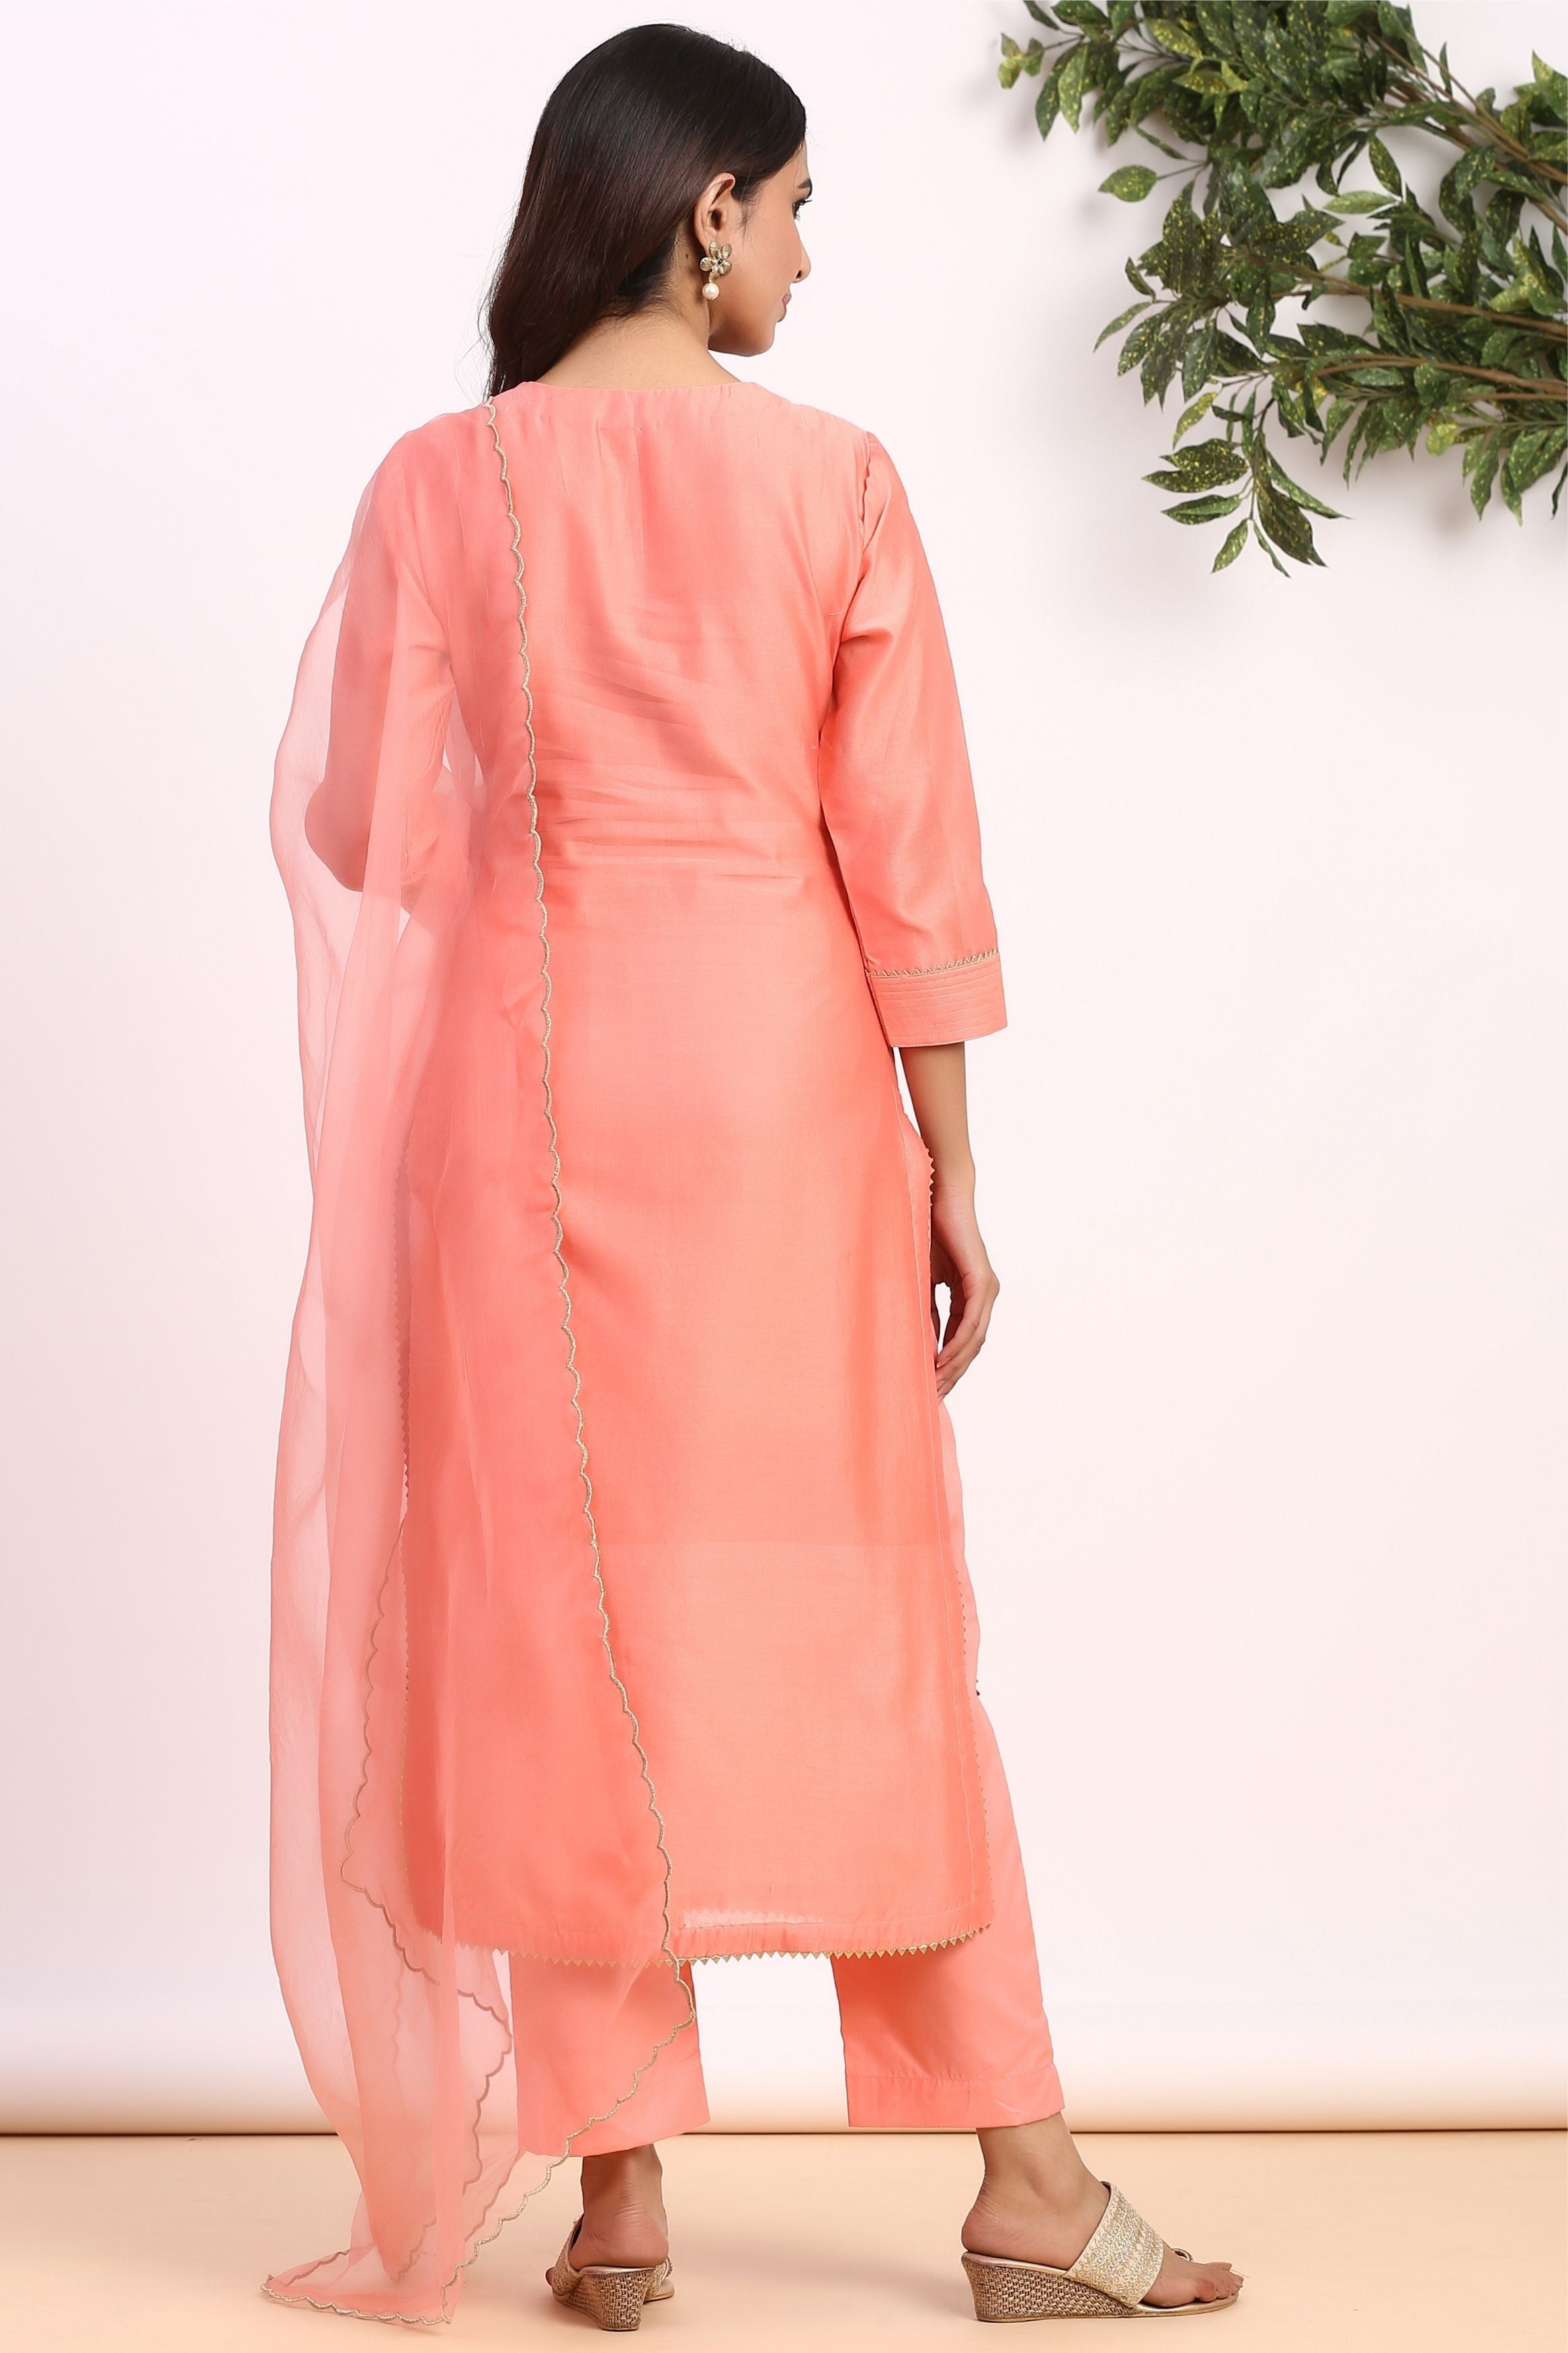 Women's Cosmic Peach Pure Chanderi Suit Set-Gillori